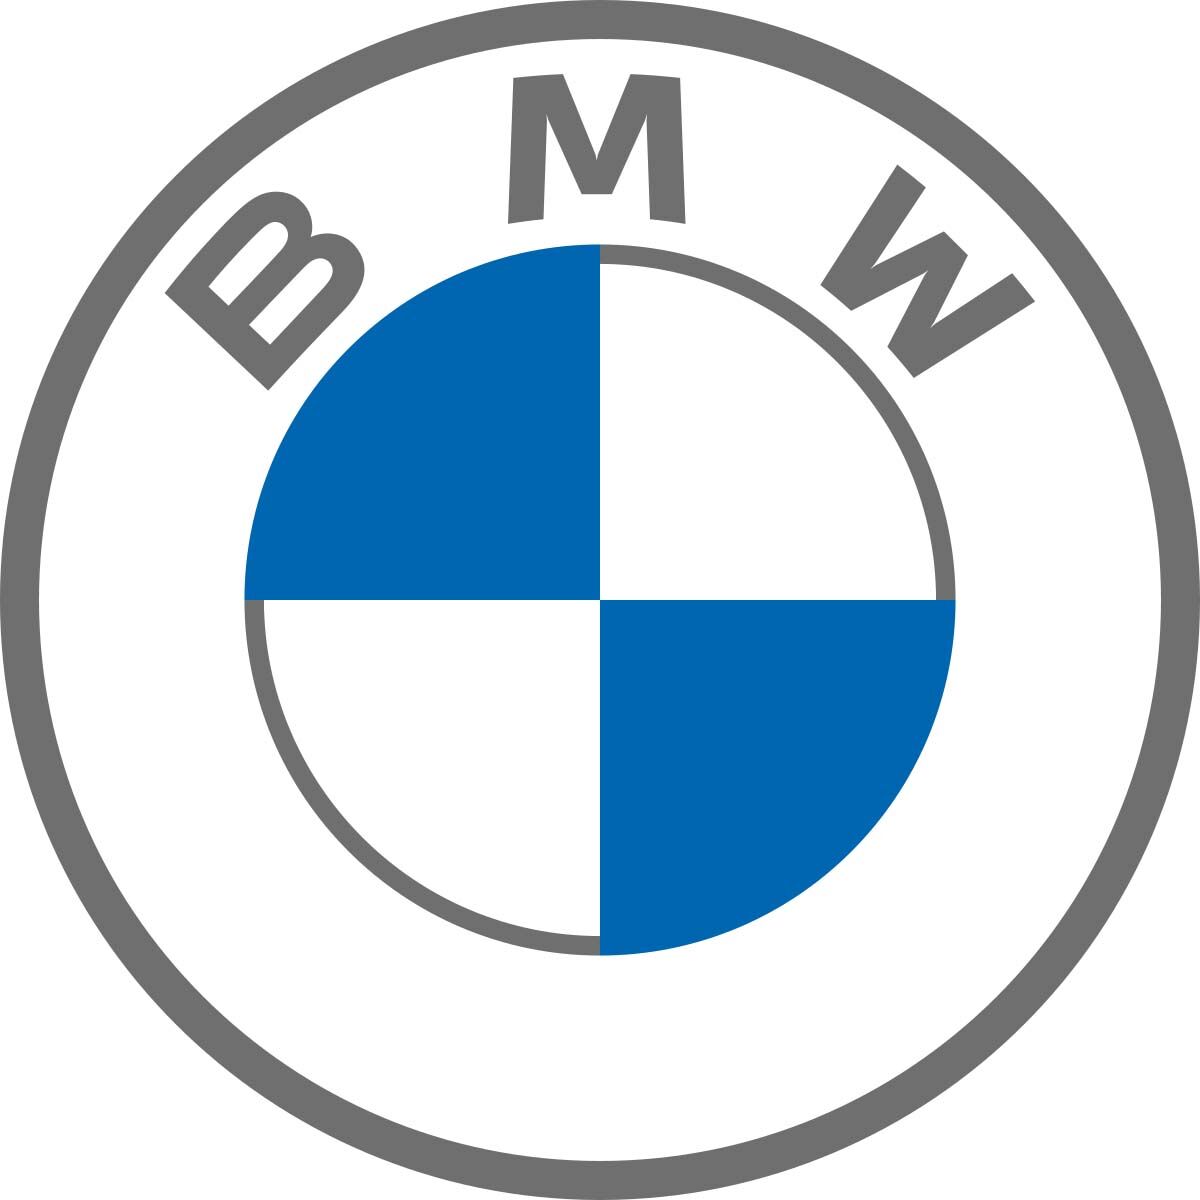 aria-label="BMW logo 2022"